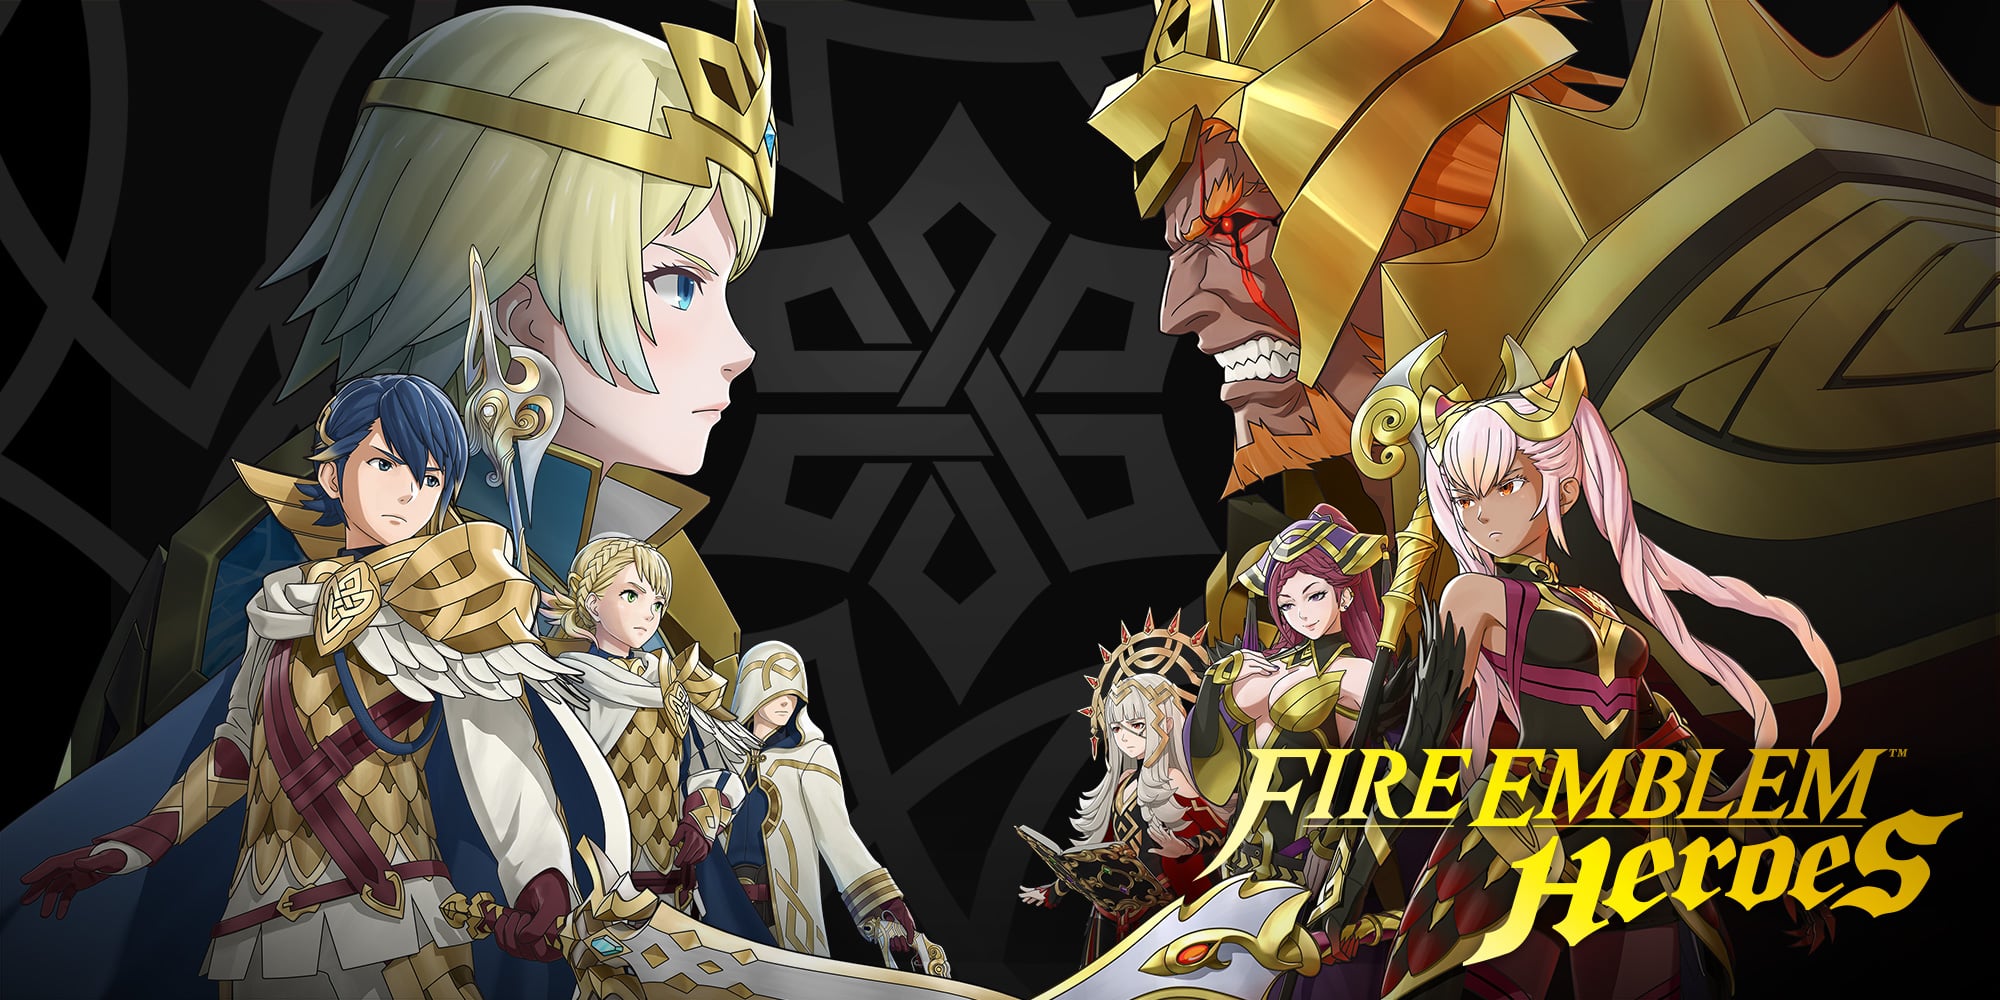 Fire Emblem Heroes Mod Apk